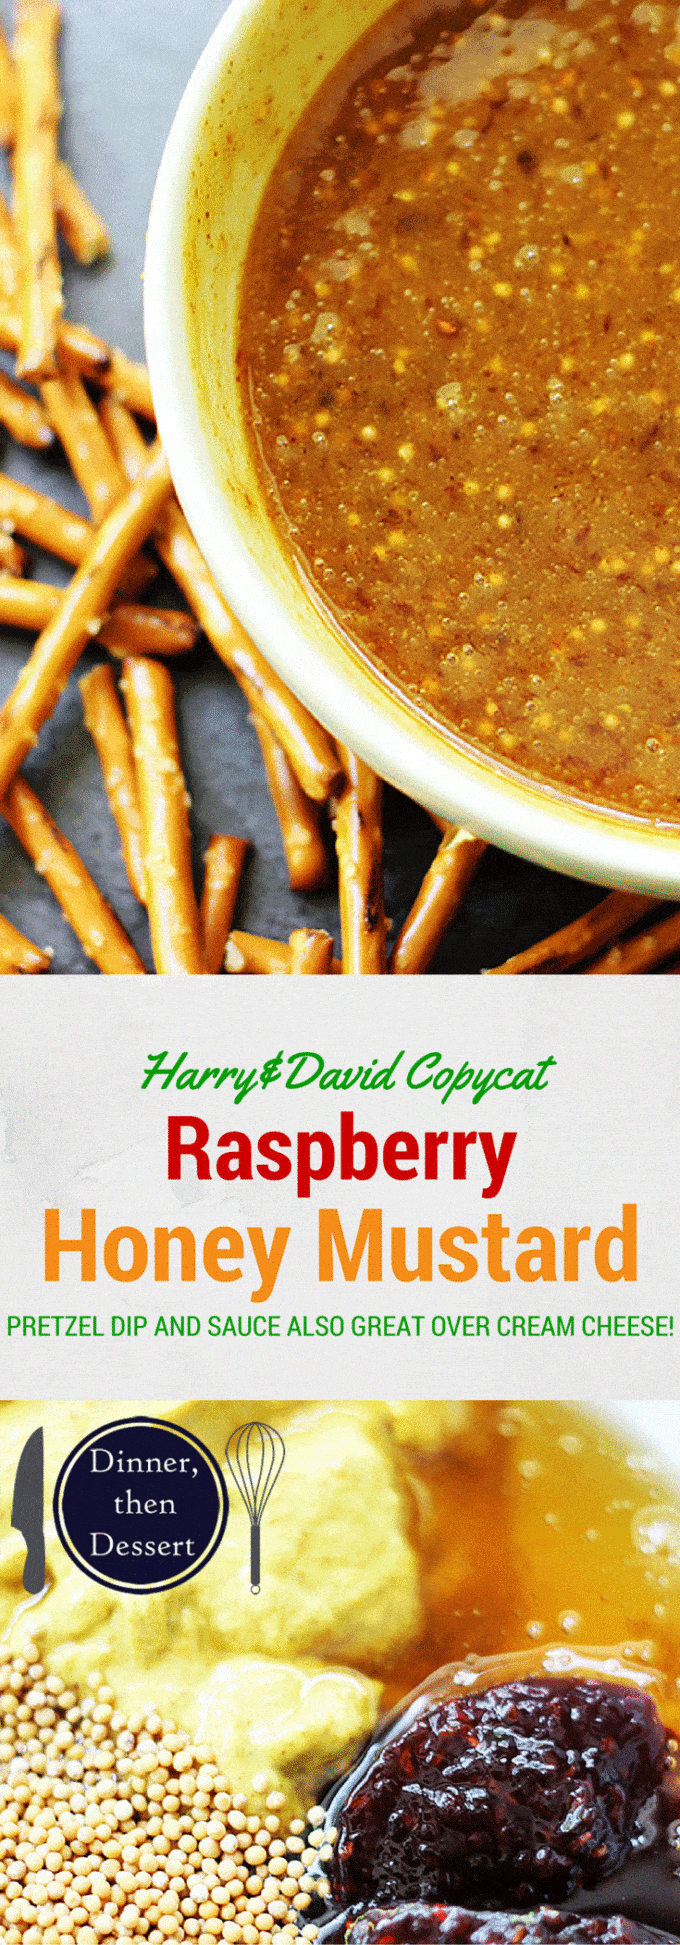 Spicy Brown Mustard, sweet Honey & Raspberry Preserves make this Raspberry Honey Mustard Dip ADDICTING! A Harry&David all-time favorite!